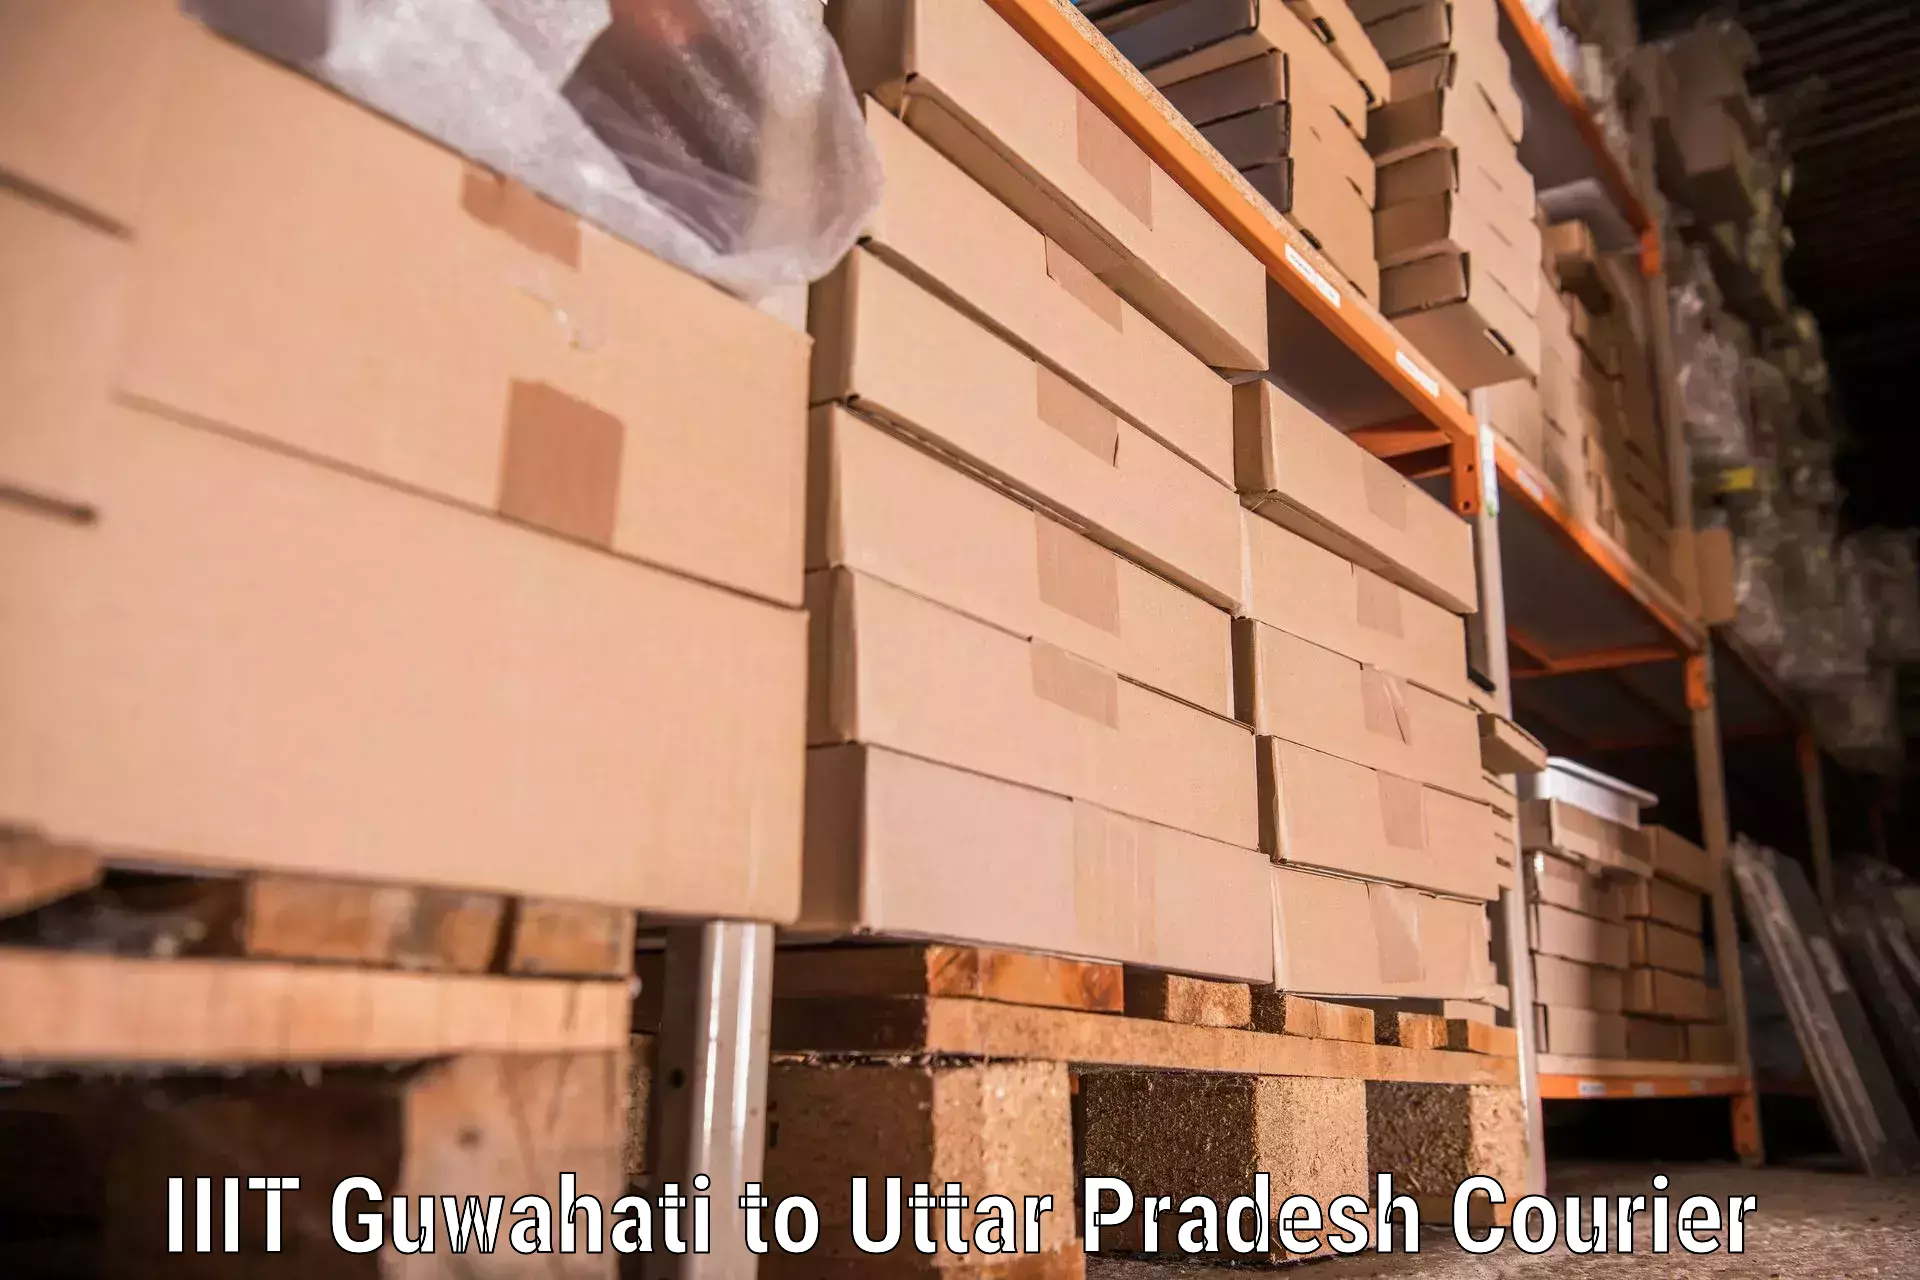 Specialized moving company IIIT Guwahati to Uttar Pradesh